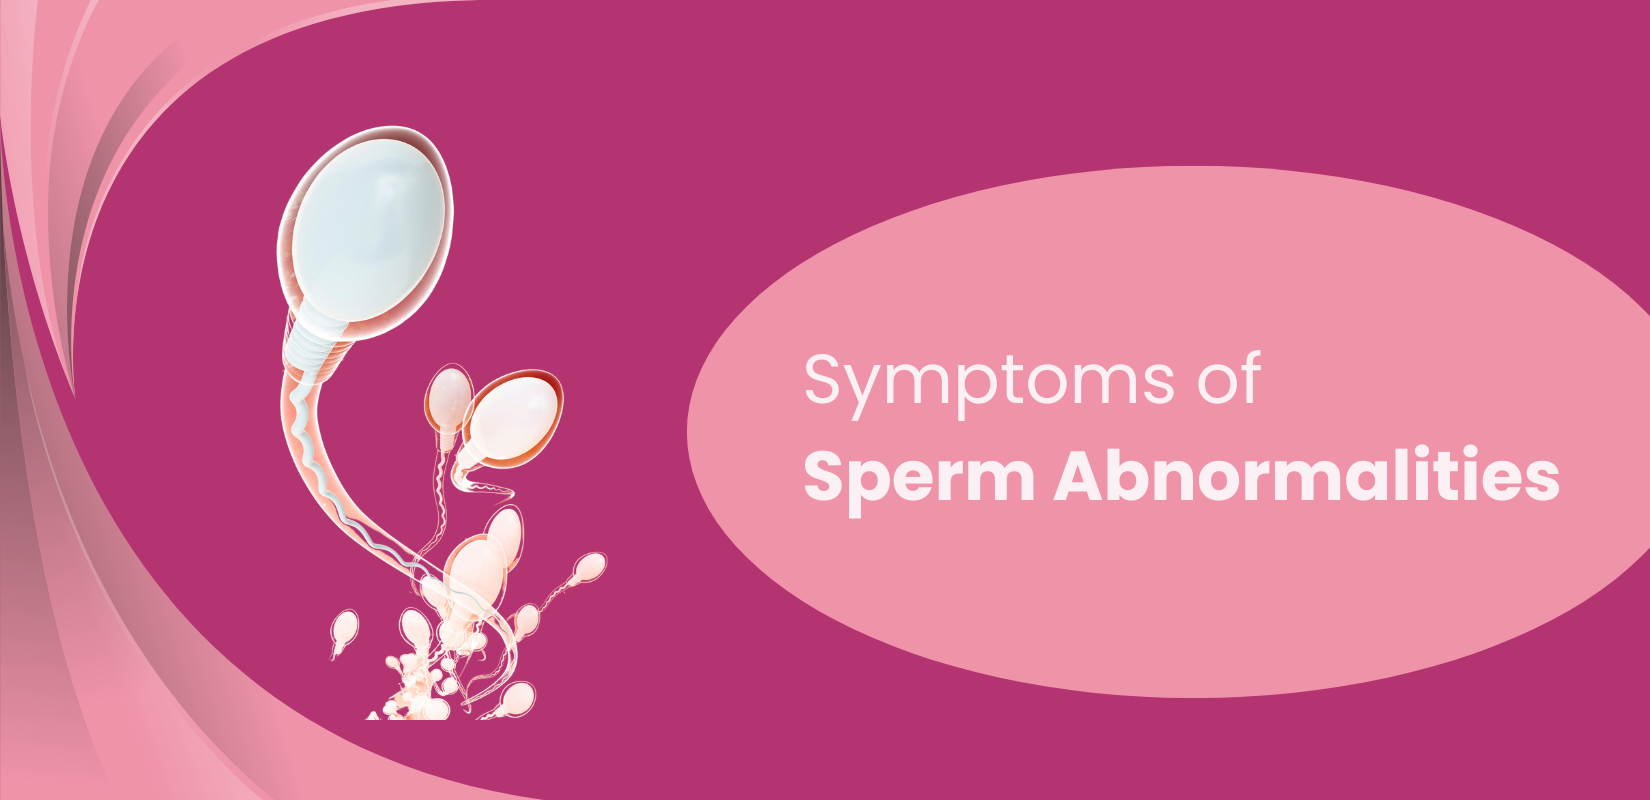 Symptoms of Sperm Abnormalities